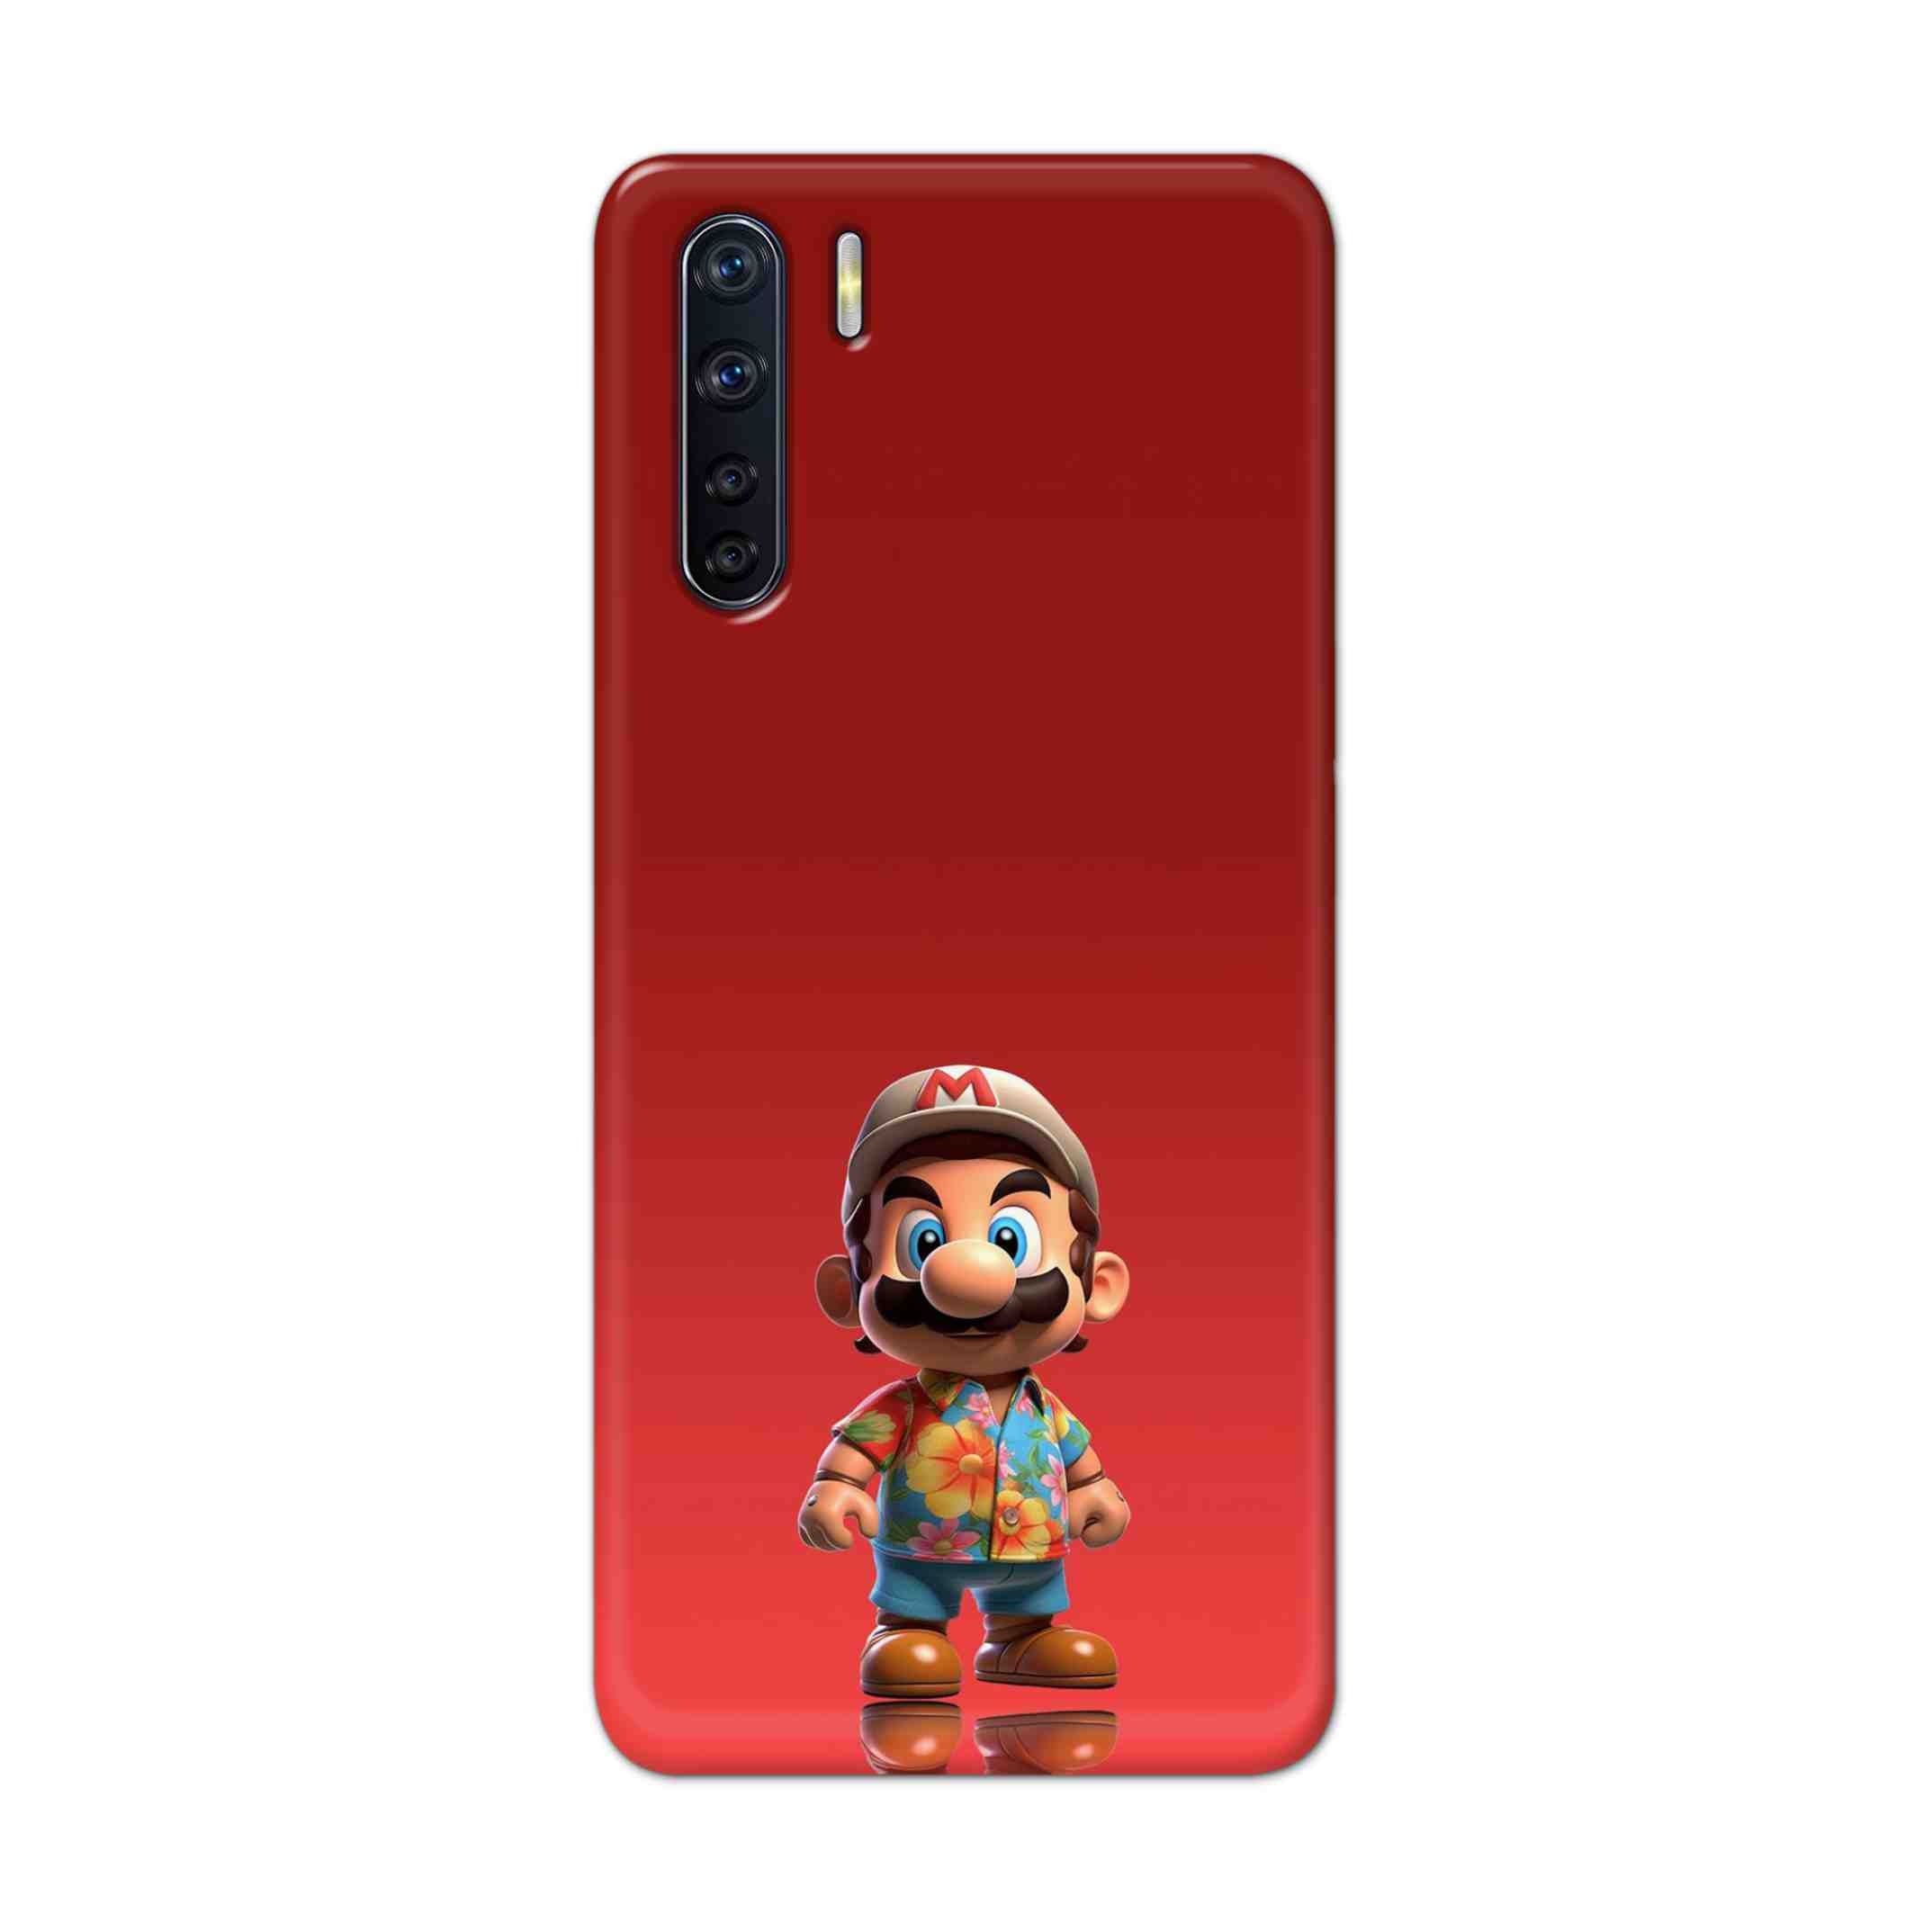 Buy Mario Hard Back Mobile Phone Case Cover For OPPO F15 Online